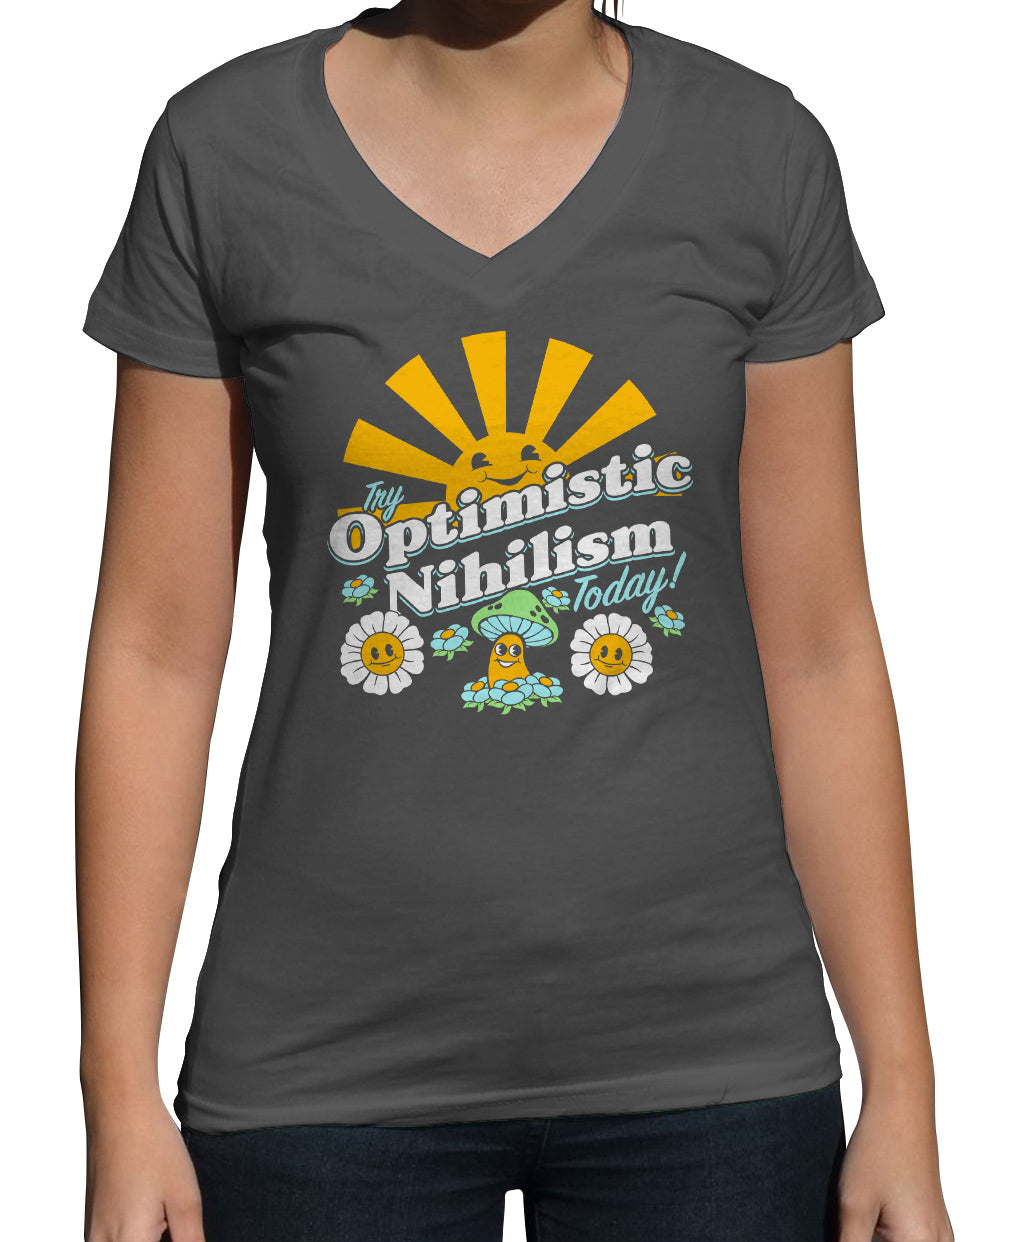 Women's Try Optimistic Nihilism Today Vneck T-Shirt